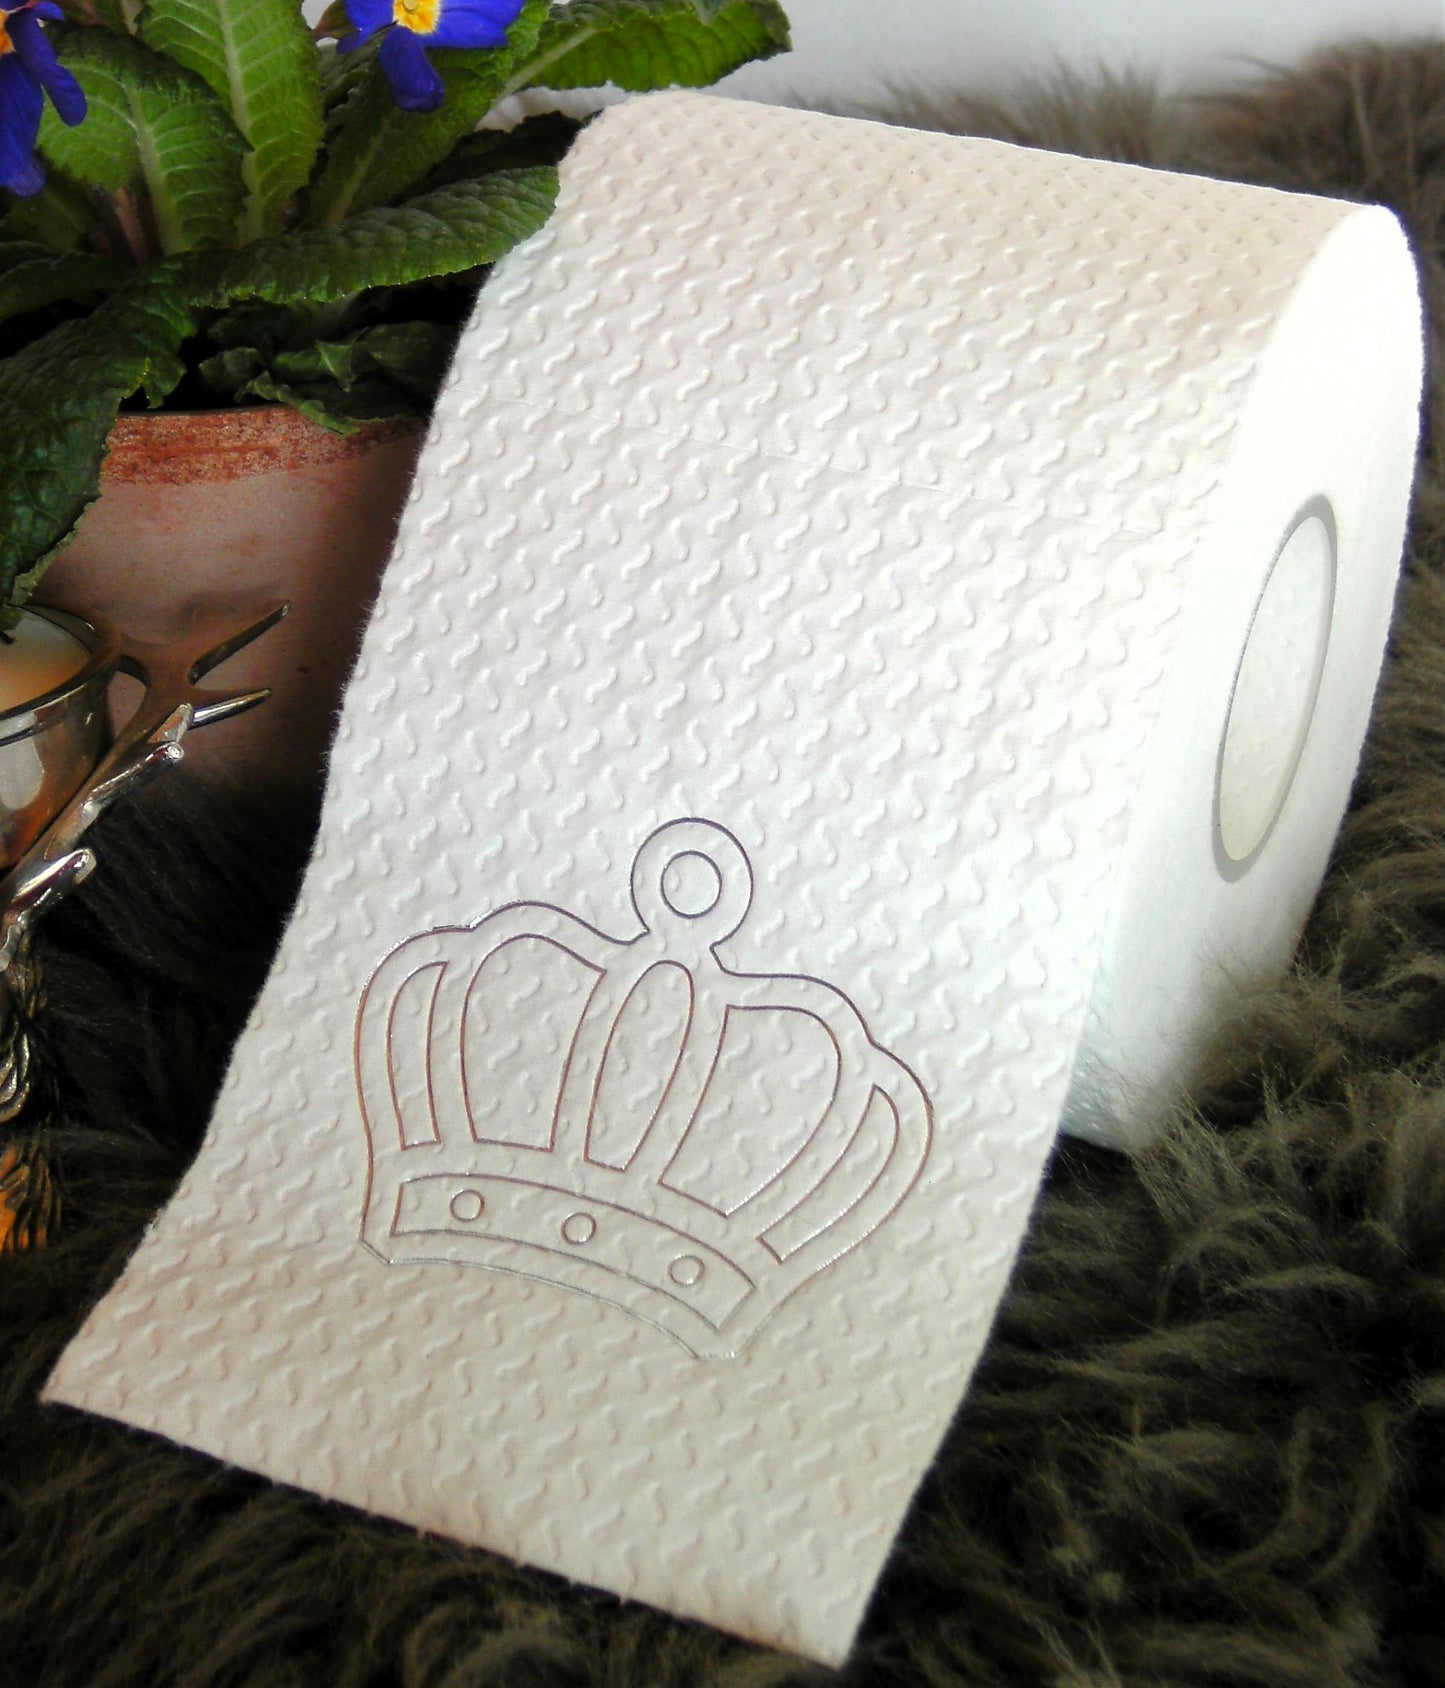 "Crown" on white